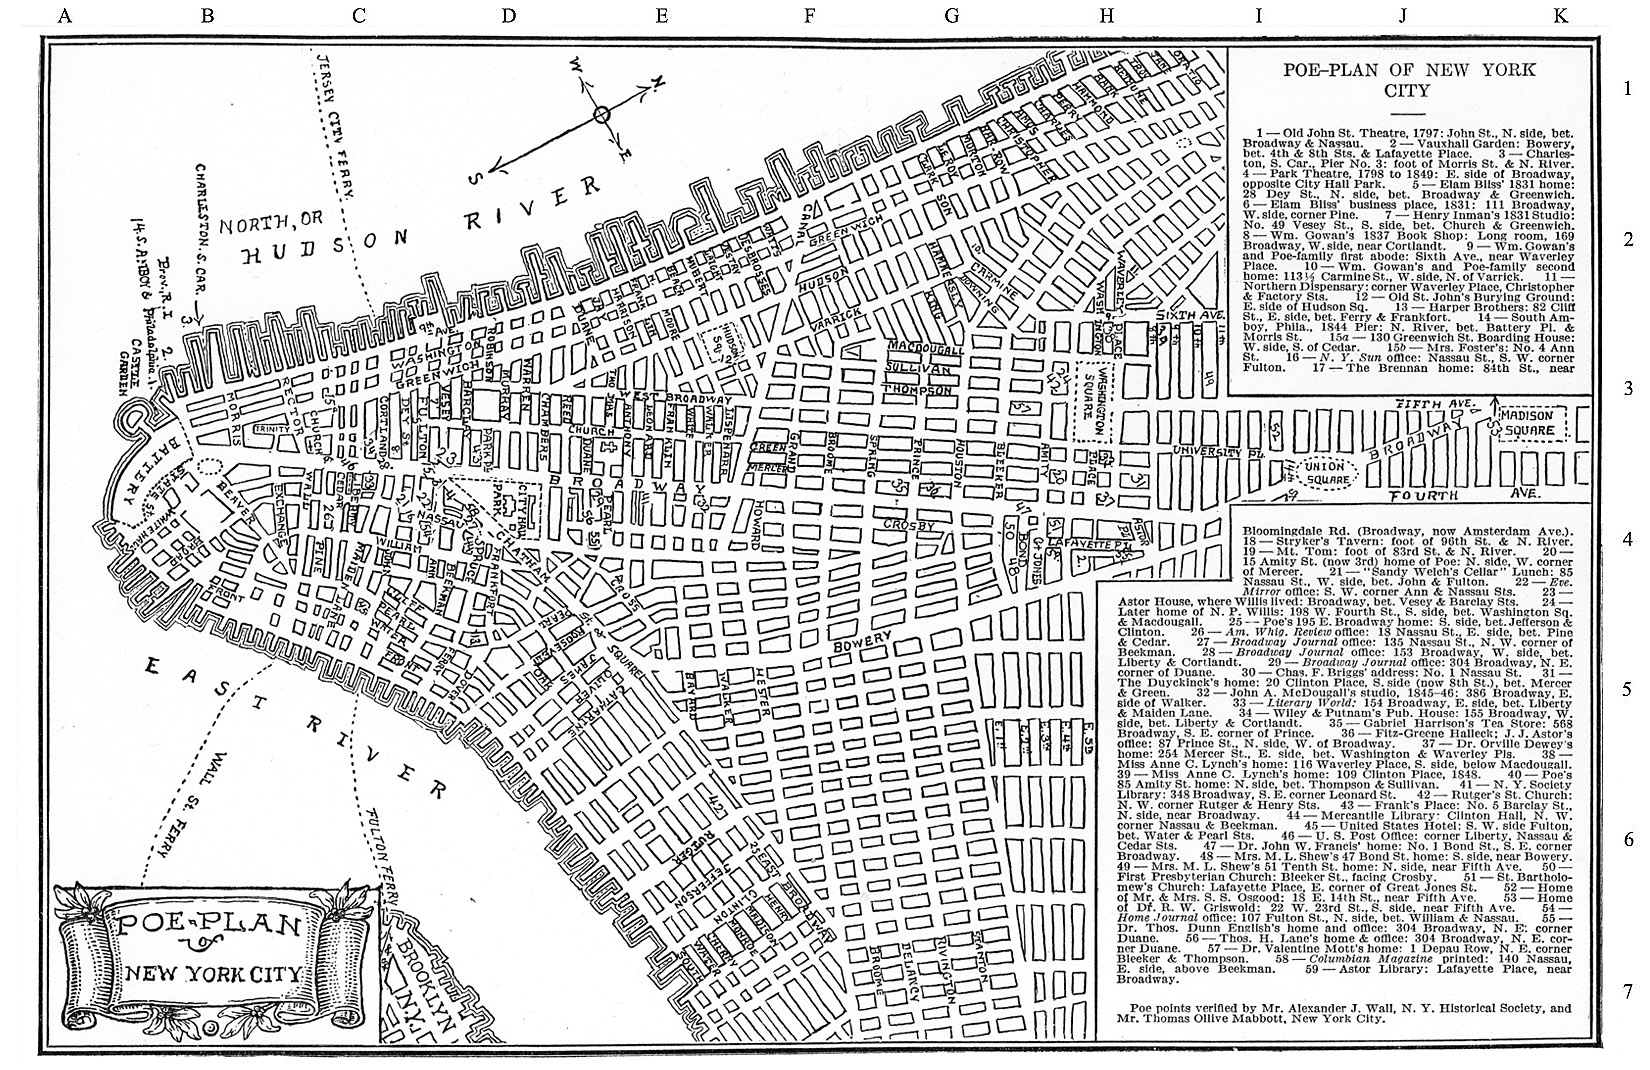 Poe Plan of New York City